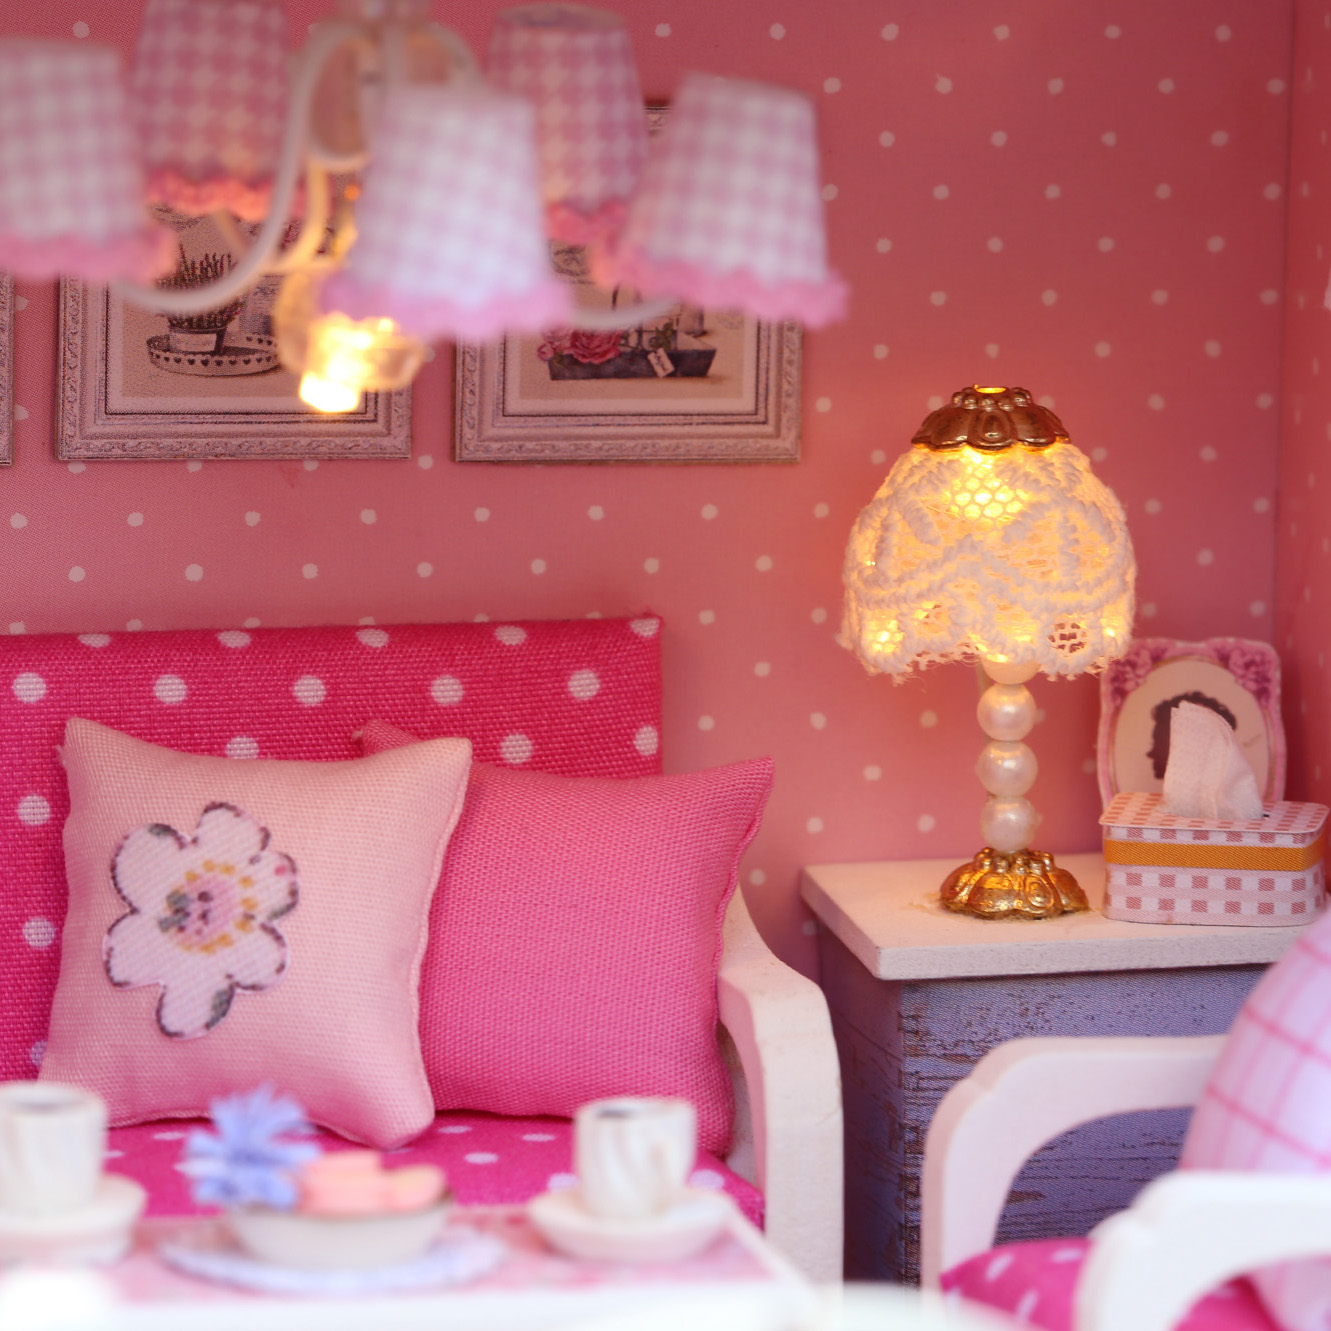 Cuteroom-124-DIY-Wooden-Dollhouse-Pink-Cherry-Handmade-Decorations-Model-with-LED-LightMusic-Birthda-1068341-8